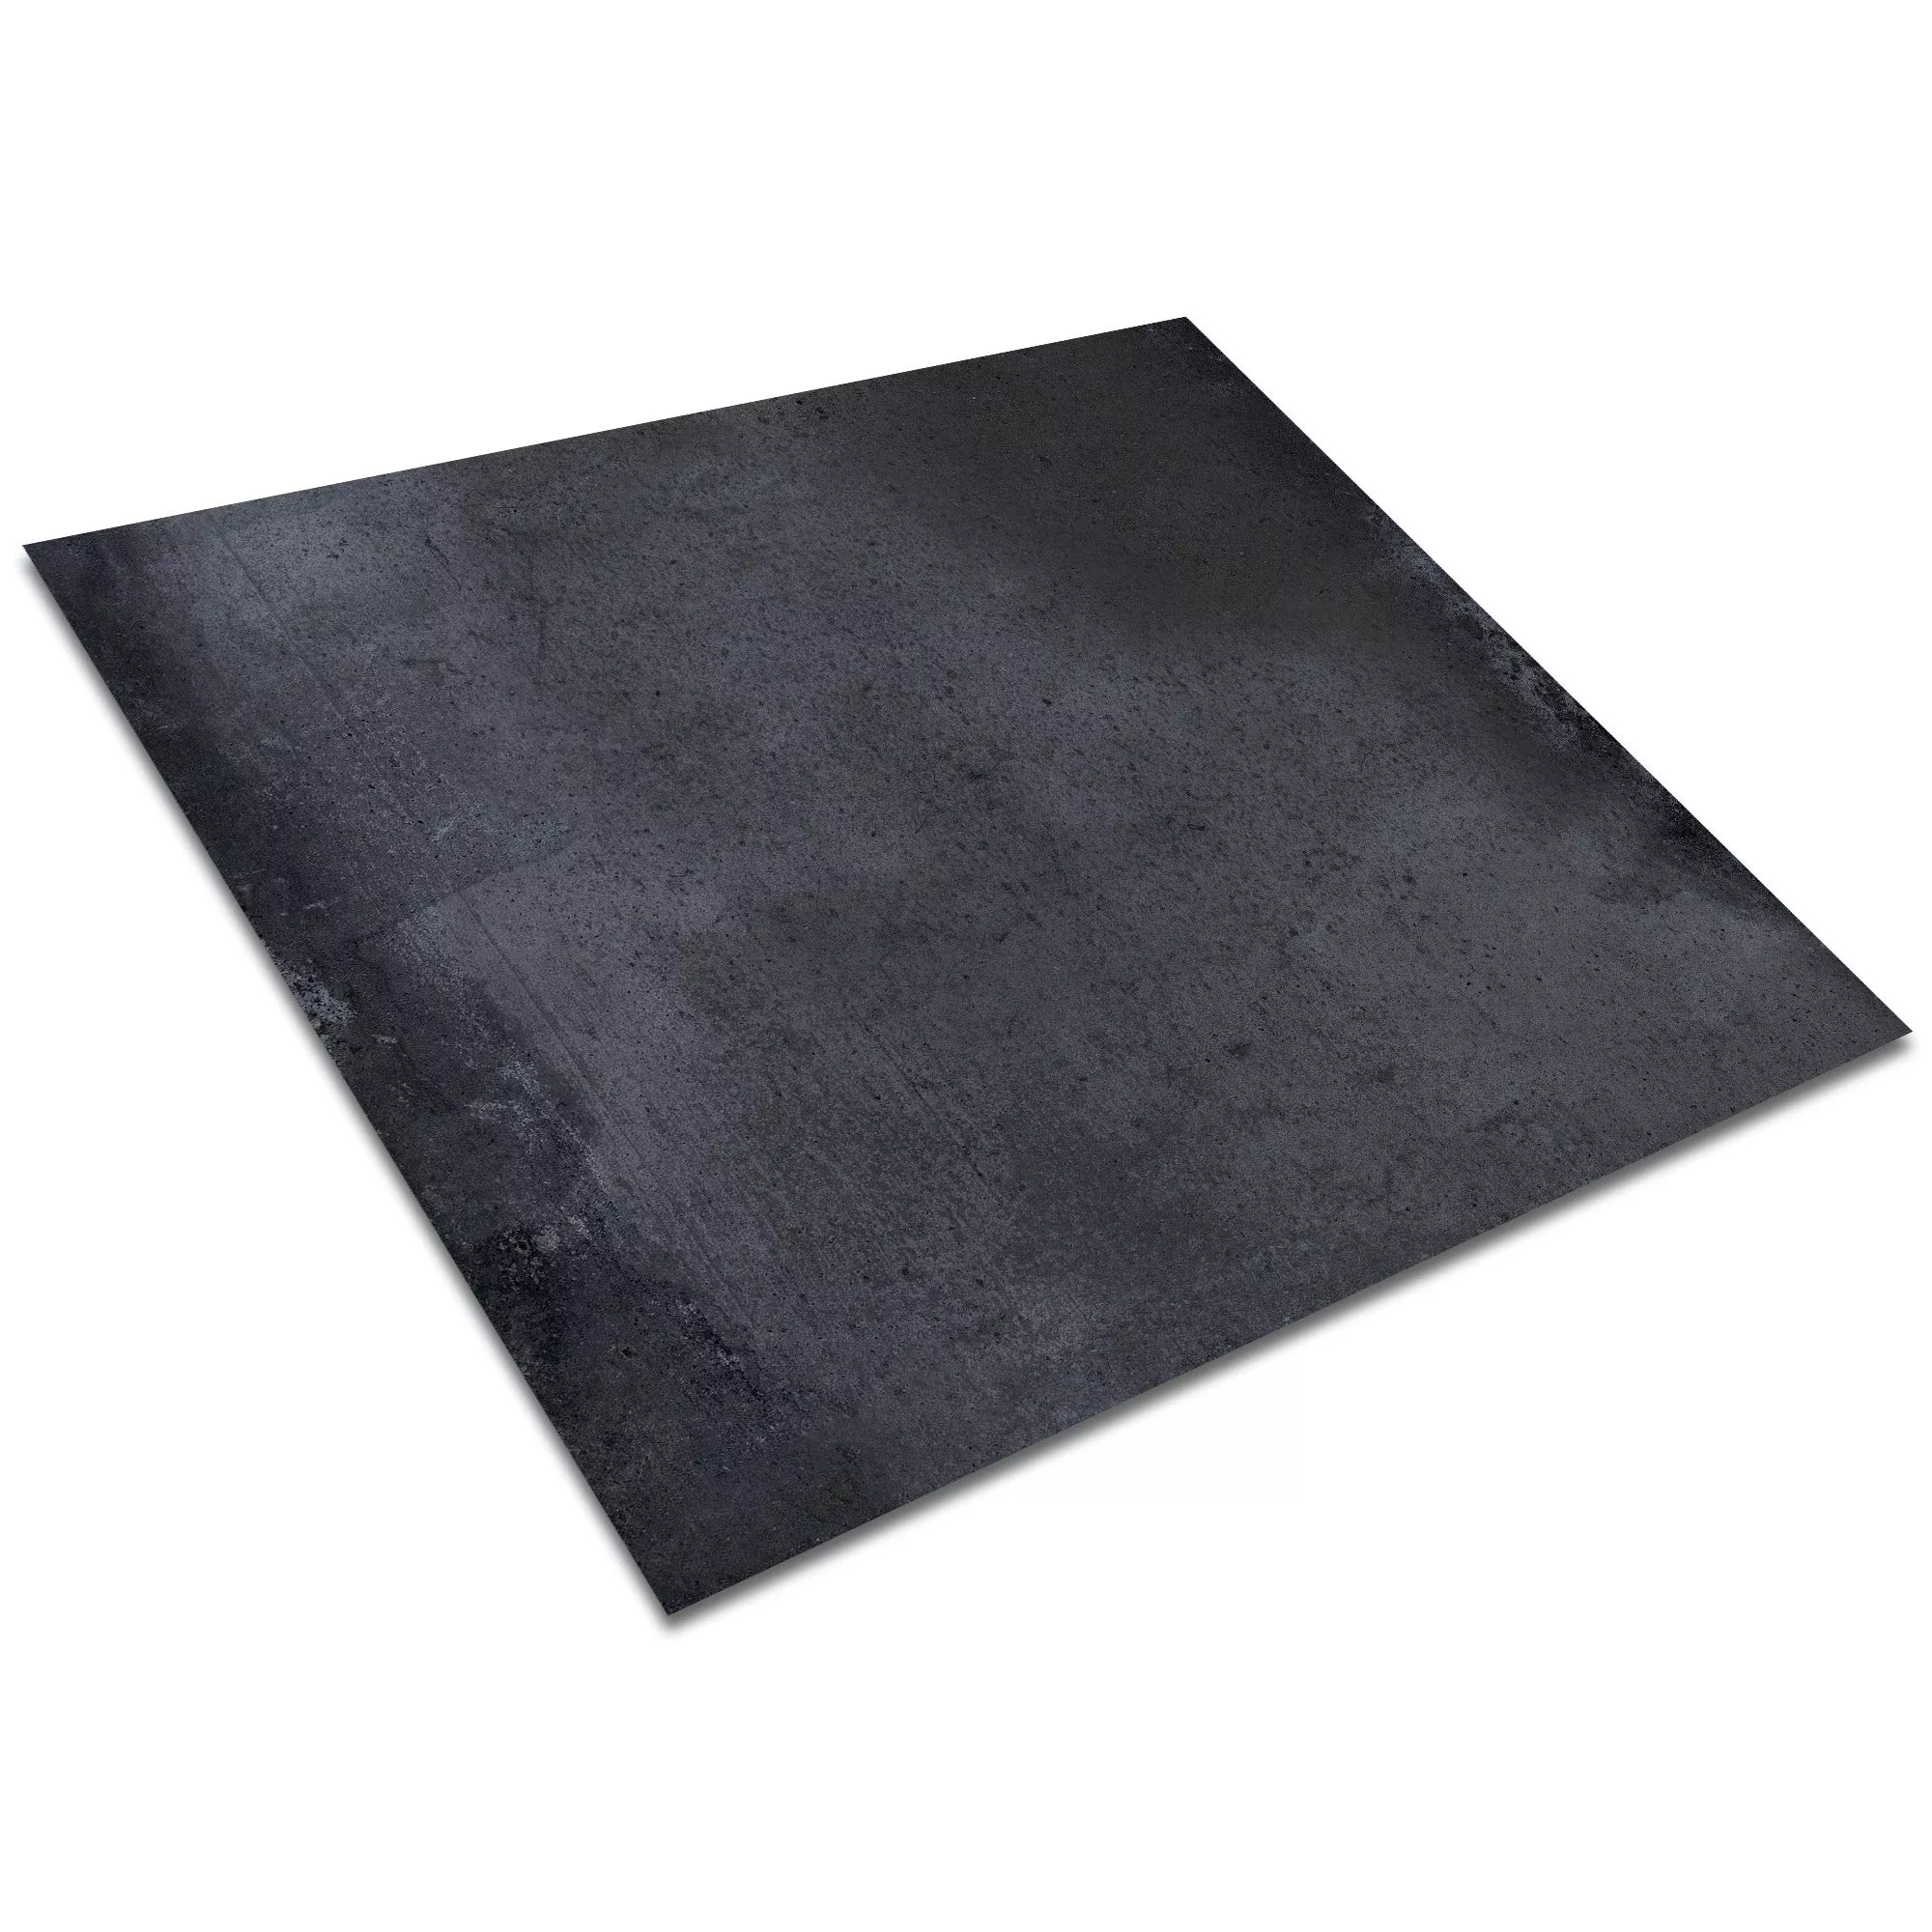 Sample Vloertegels Cement Optic Maryland Antraciet 60x60cm